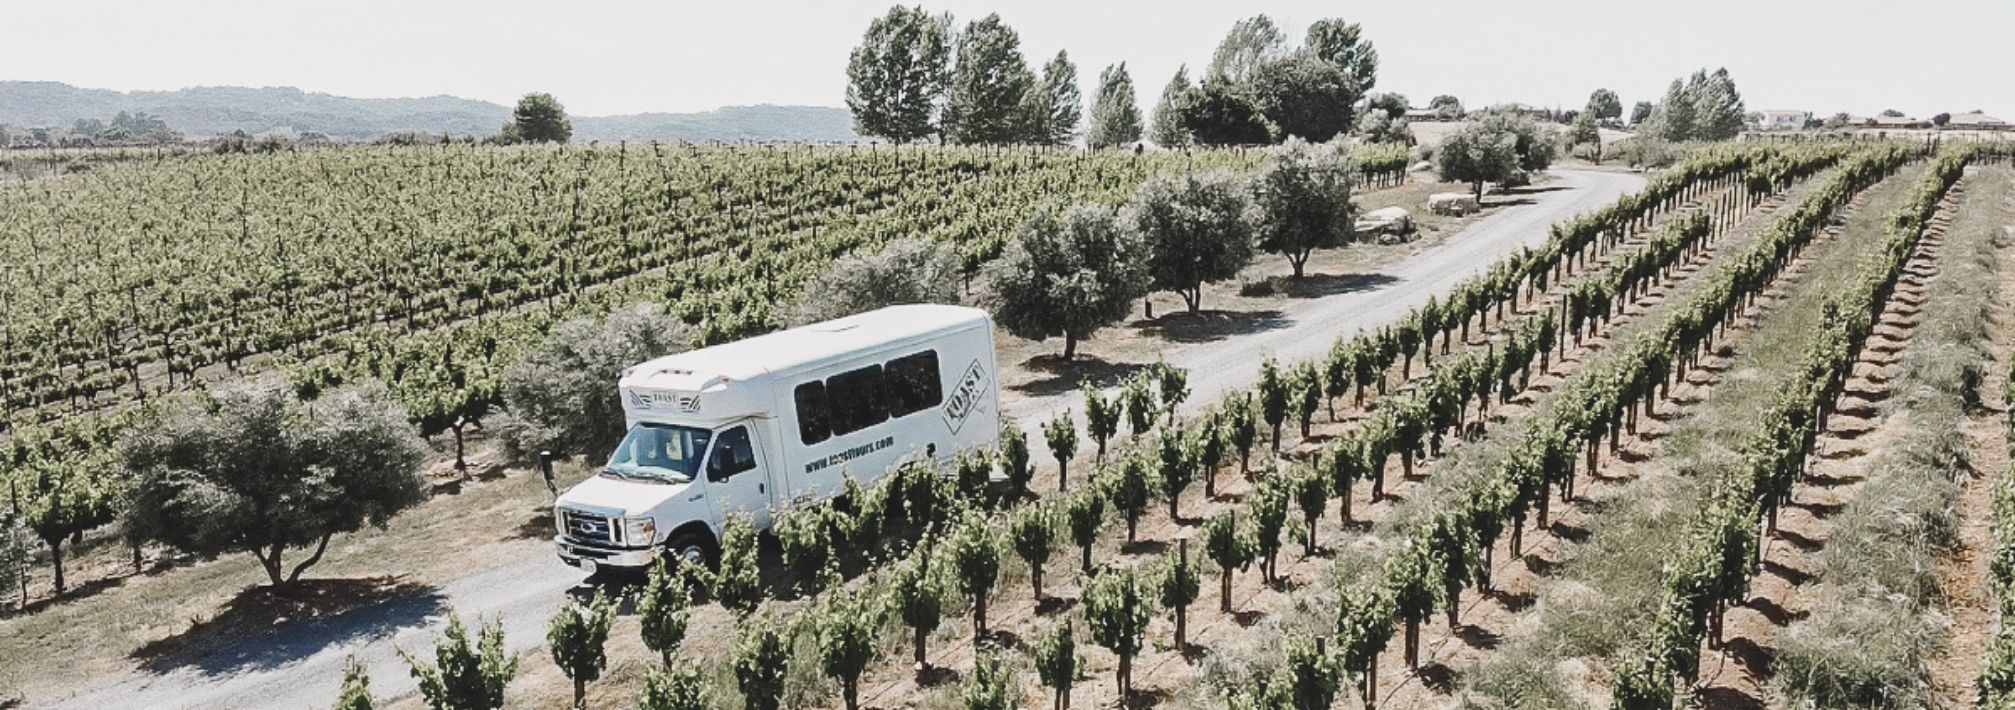 wine tasting transportation bus driving through a Paso Robles vineyard